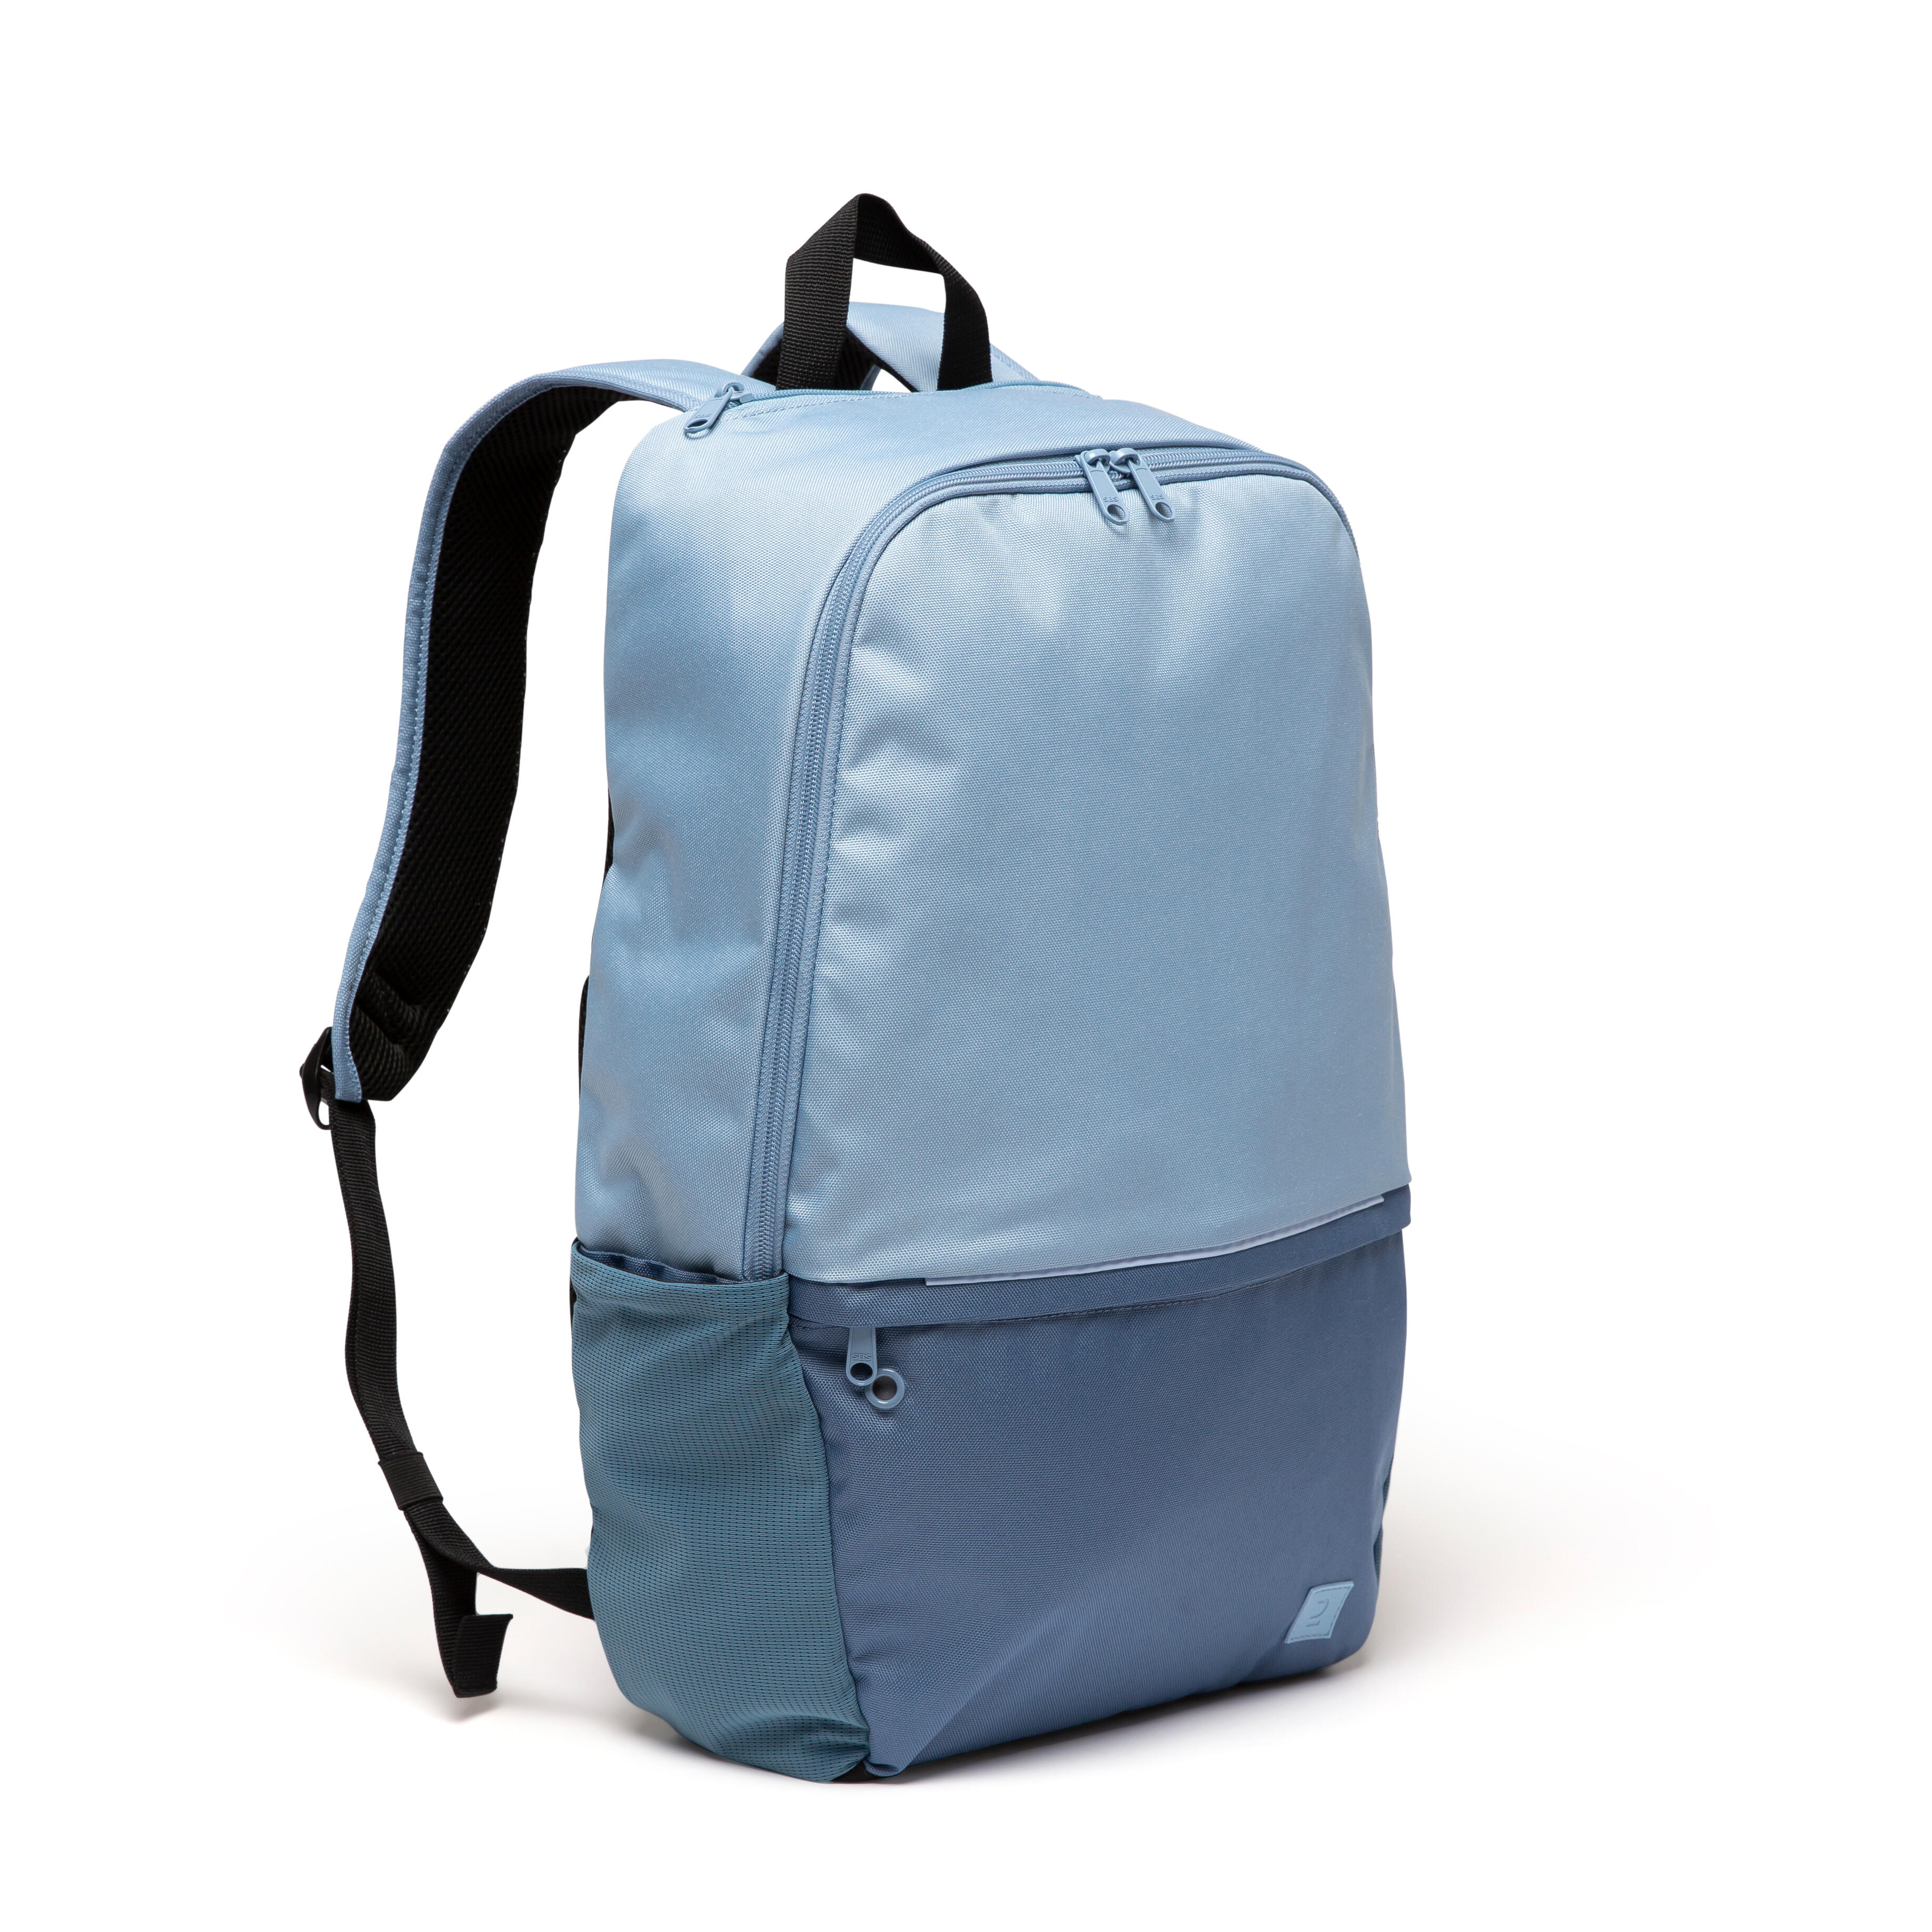 Football Backpack Bag 24L Blue